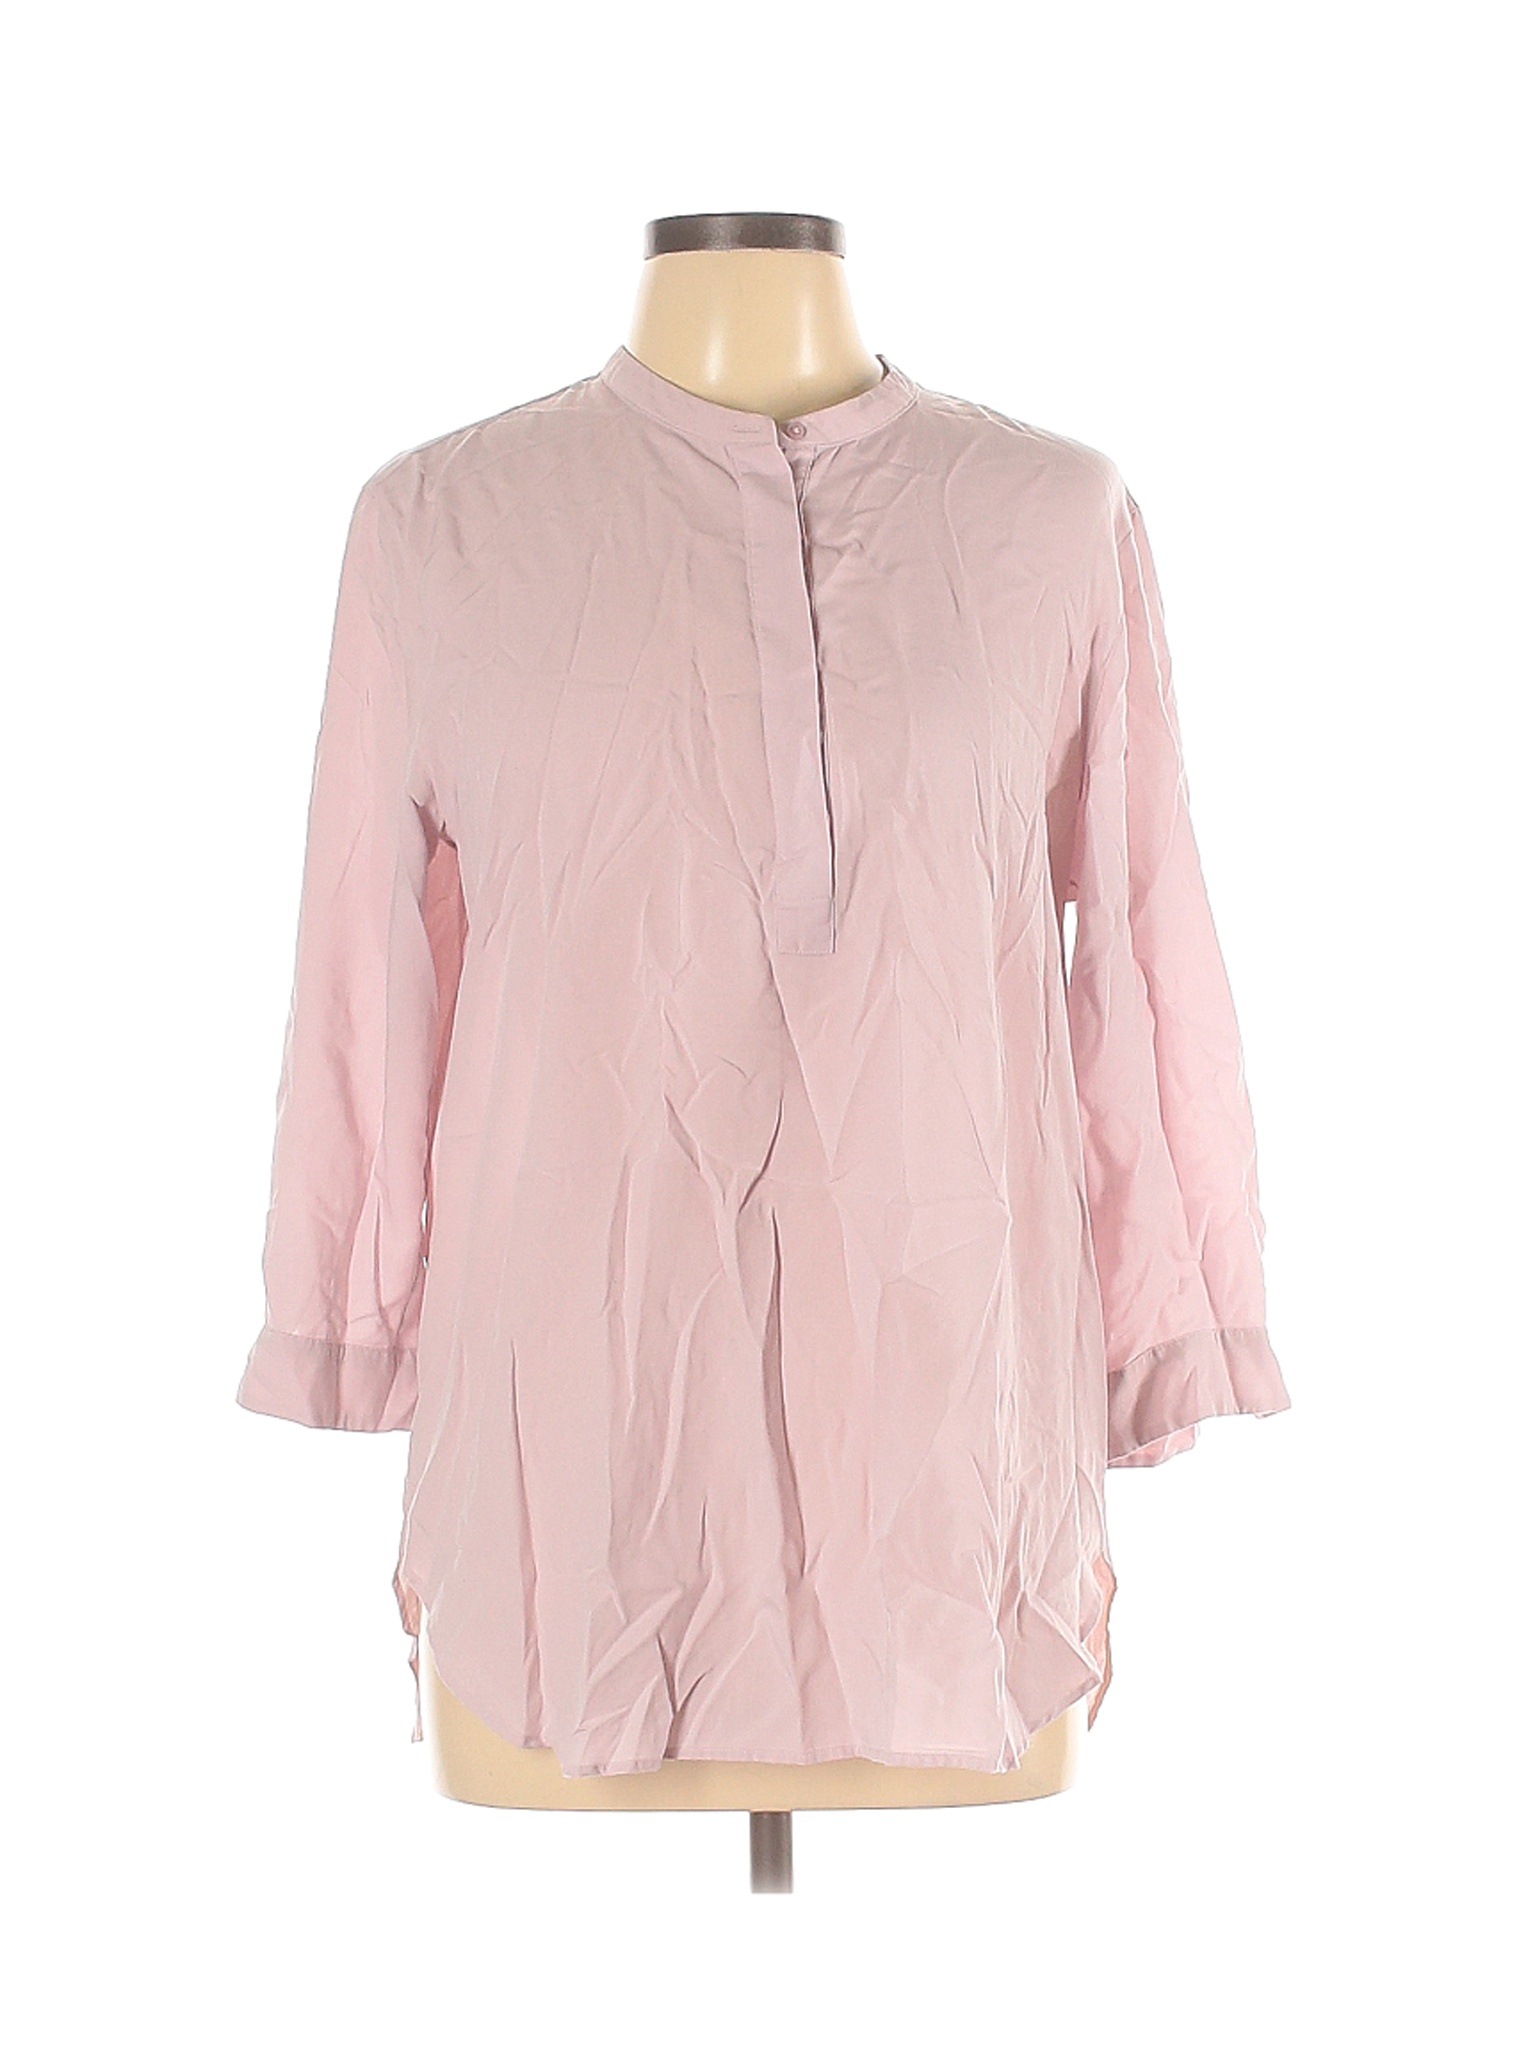 Uniqlo Women Pink 3/4 Sleeve Blouse L | eBay